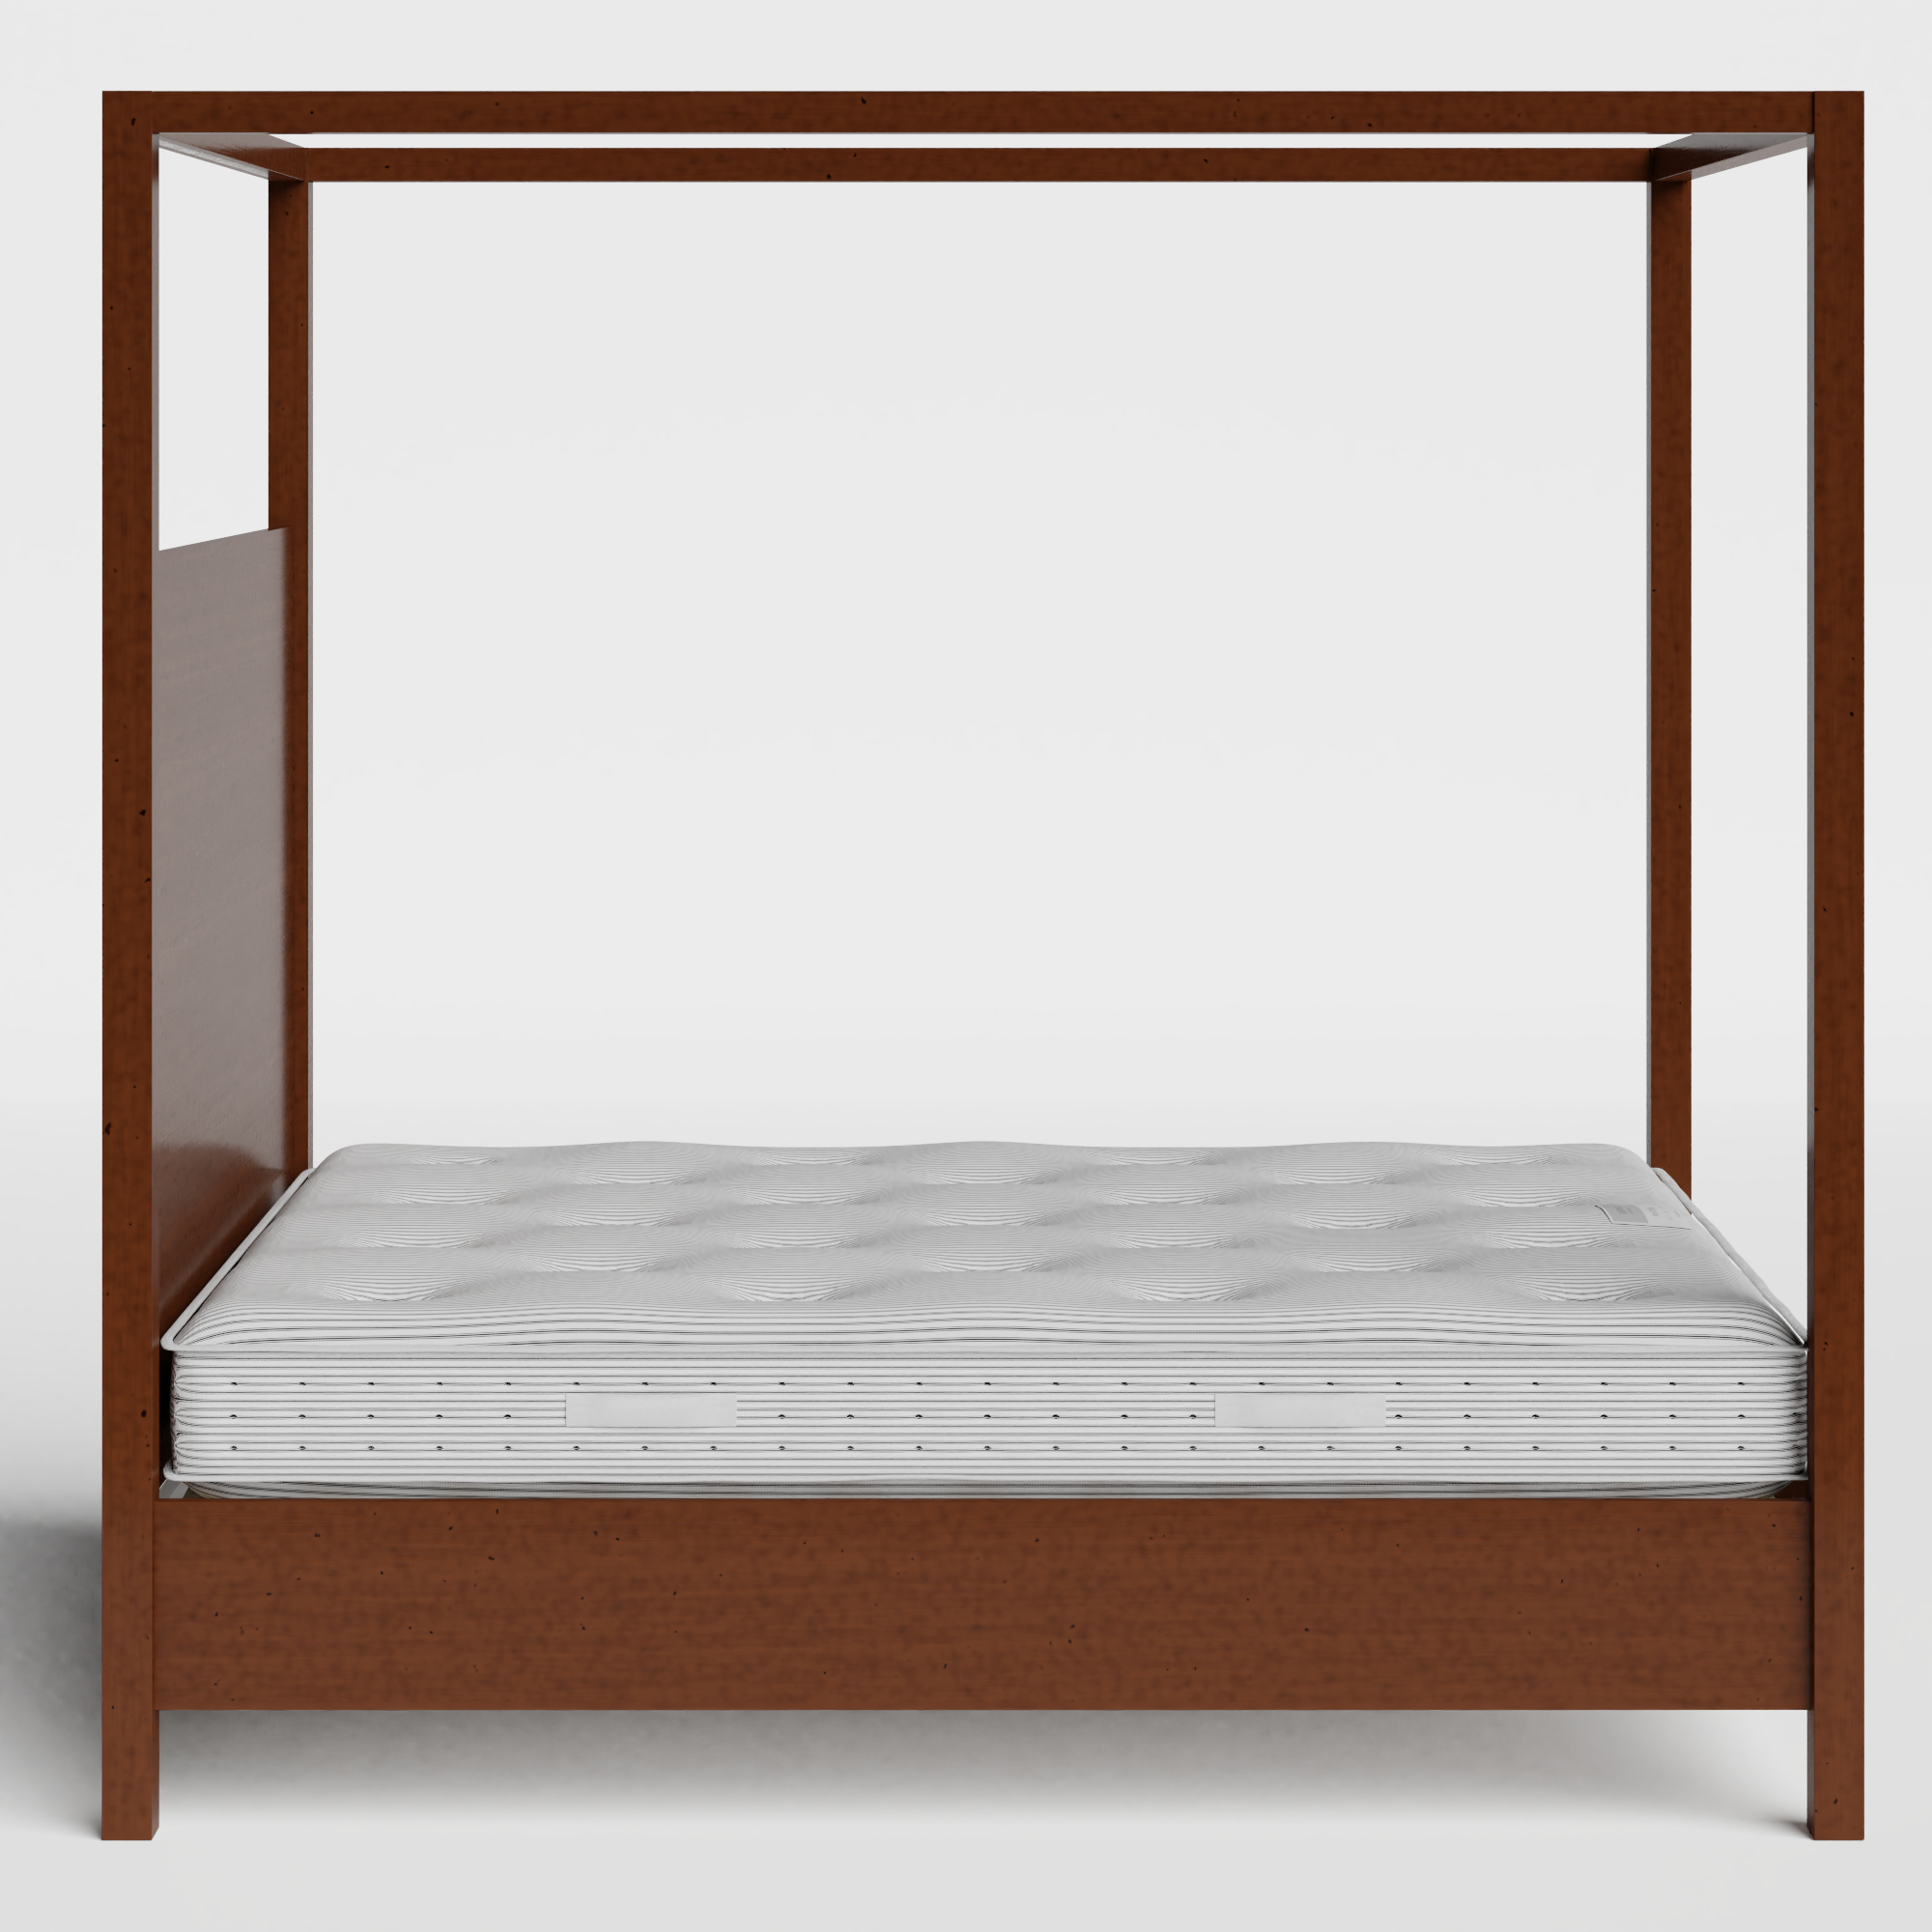 Churchill wood bed in dark cherry with Juno mattress